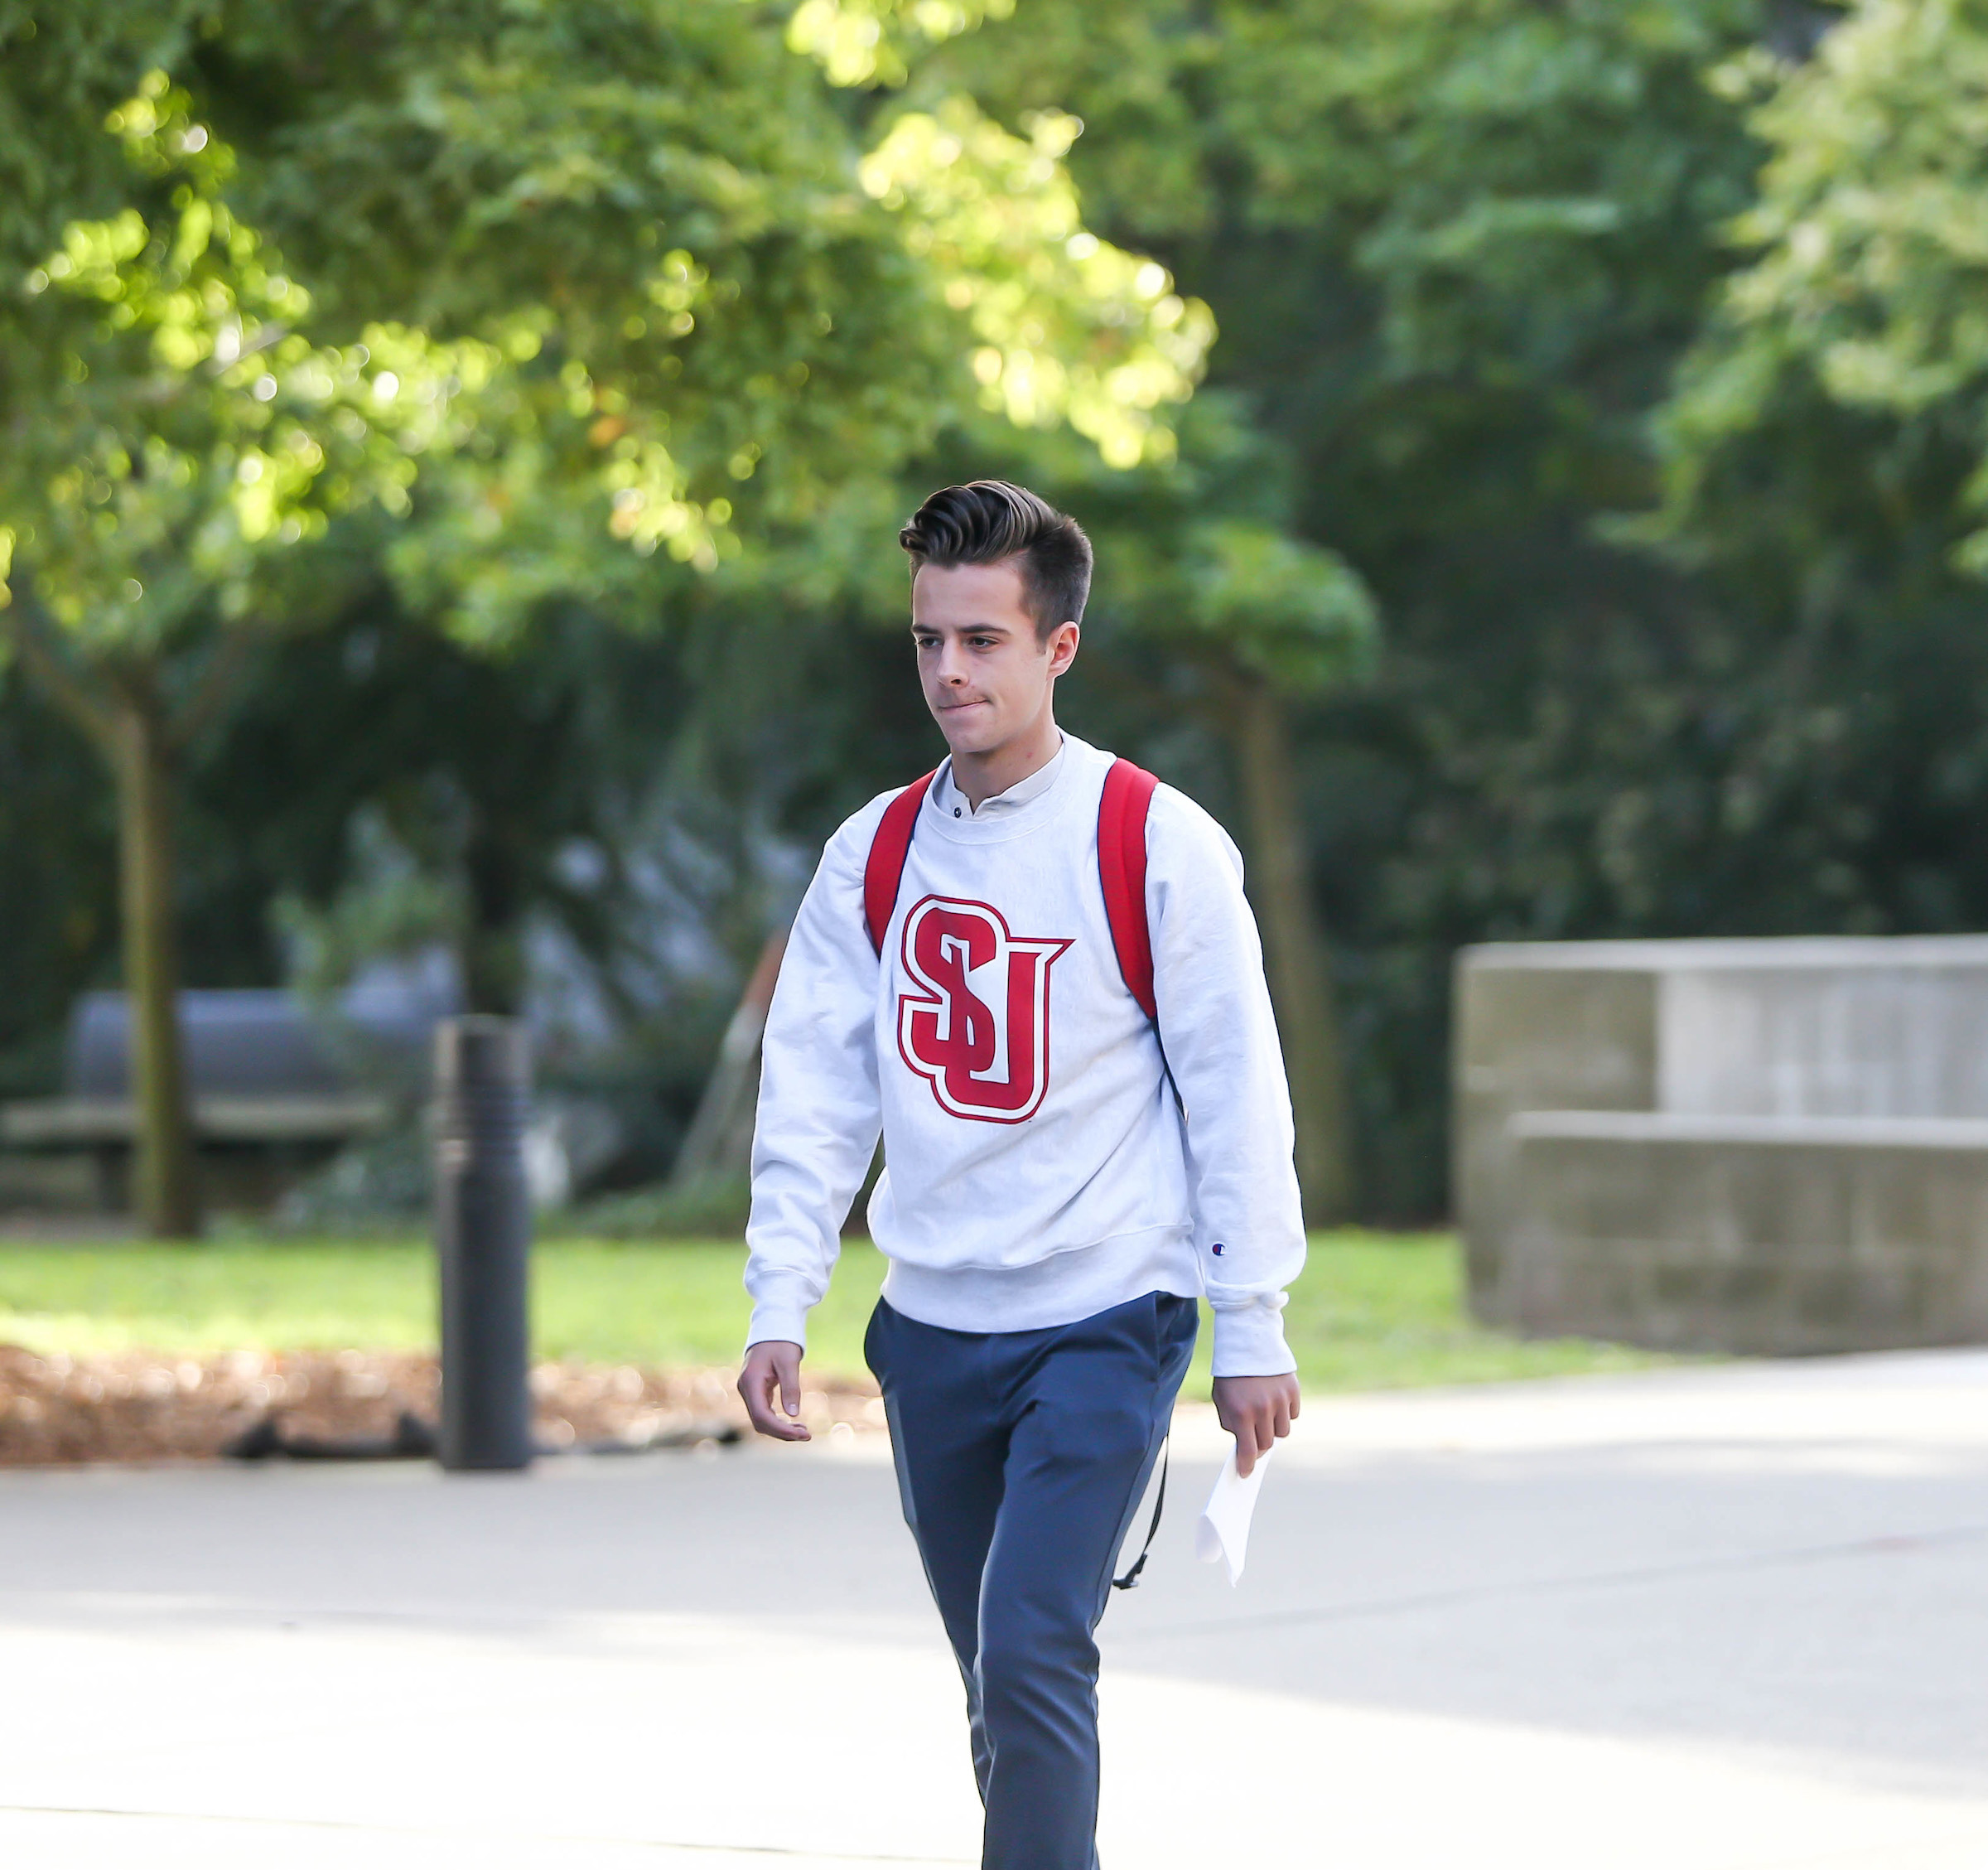 Student wearing SU sweatshirt walking through campus.